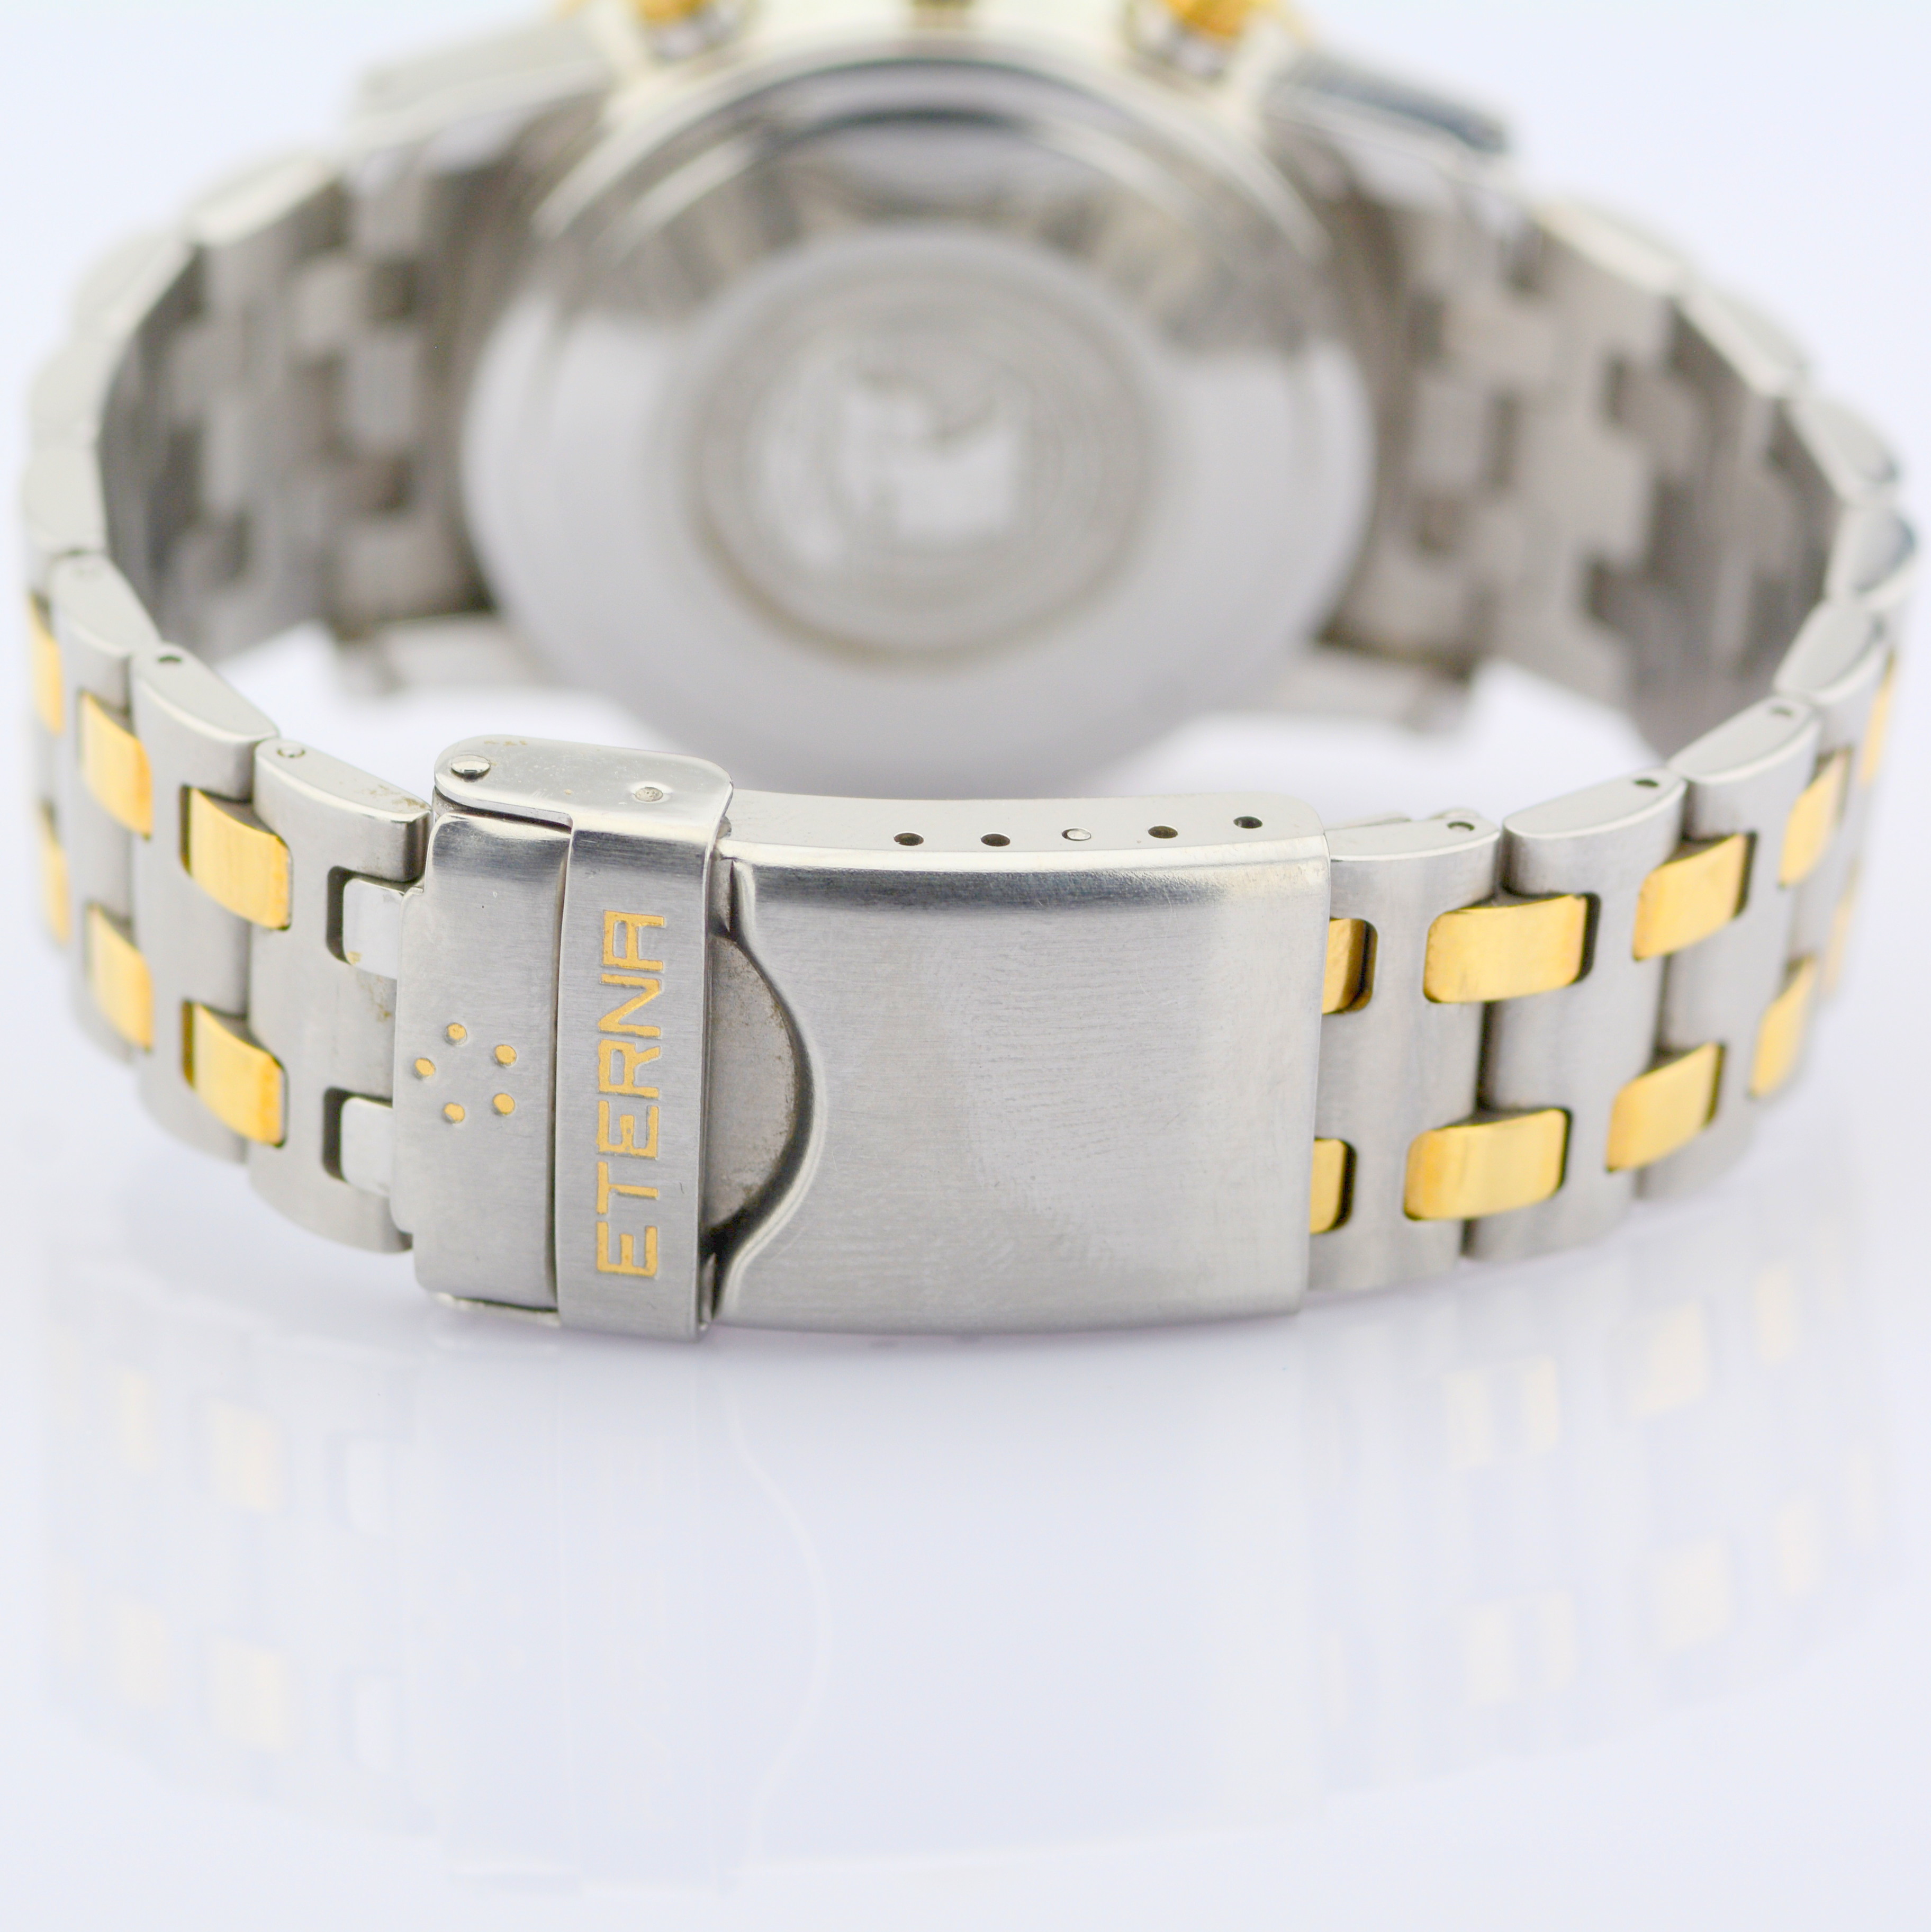 Eterna-Matic / Kontiki - Gentlmen's Steel Wrist Watch - Image 5 of 6